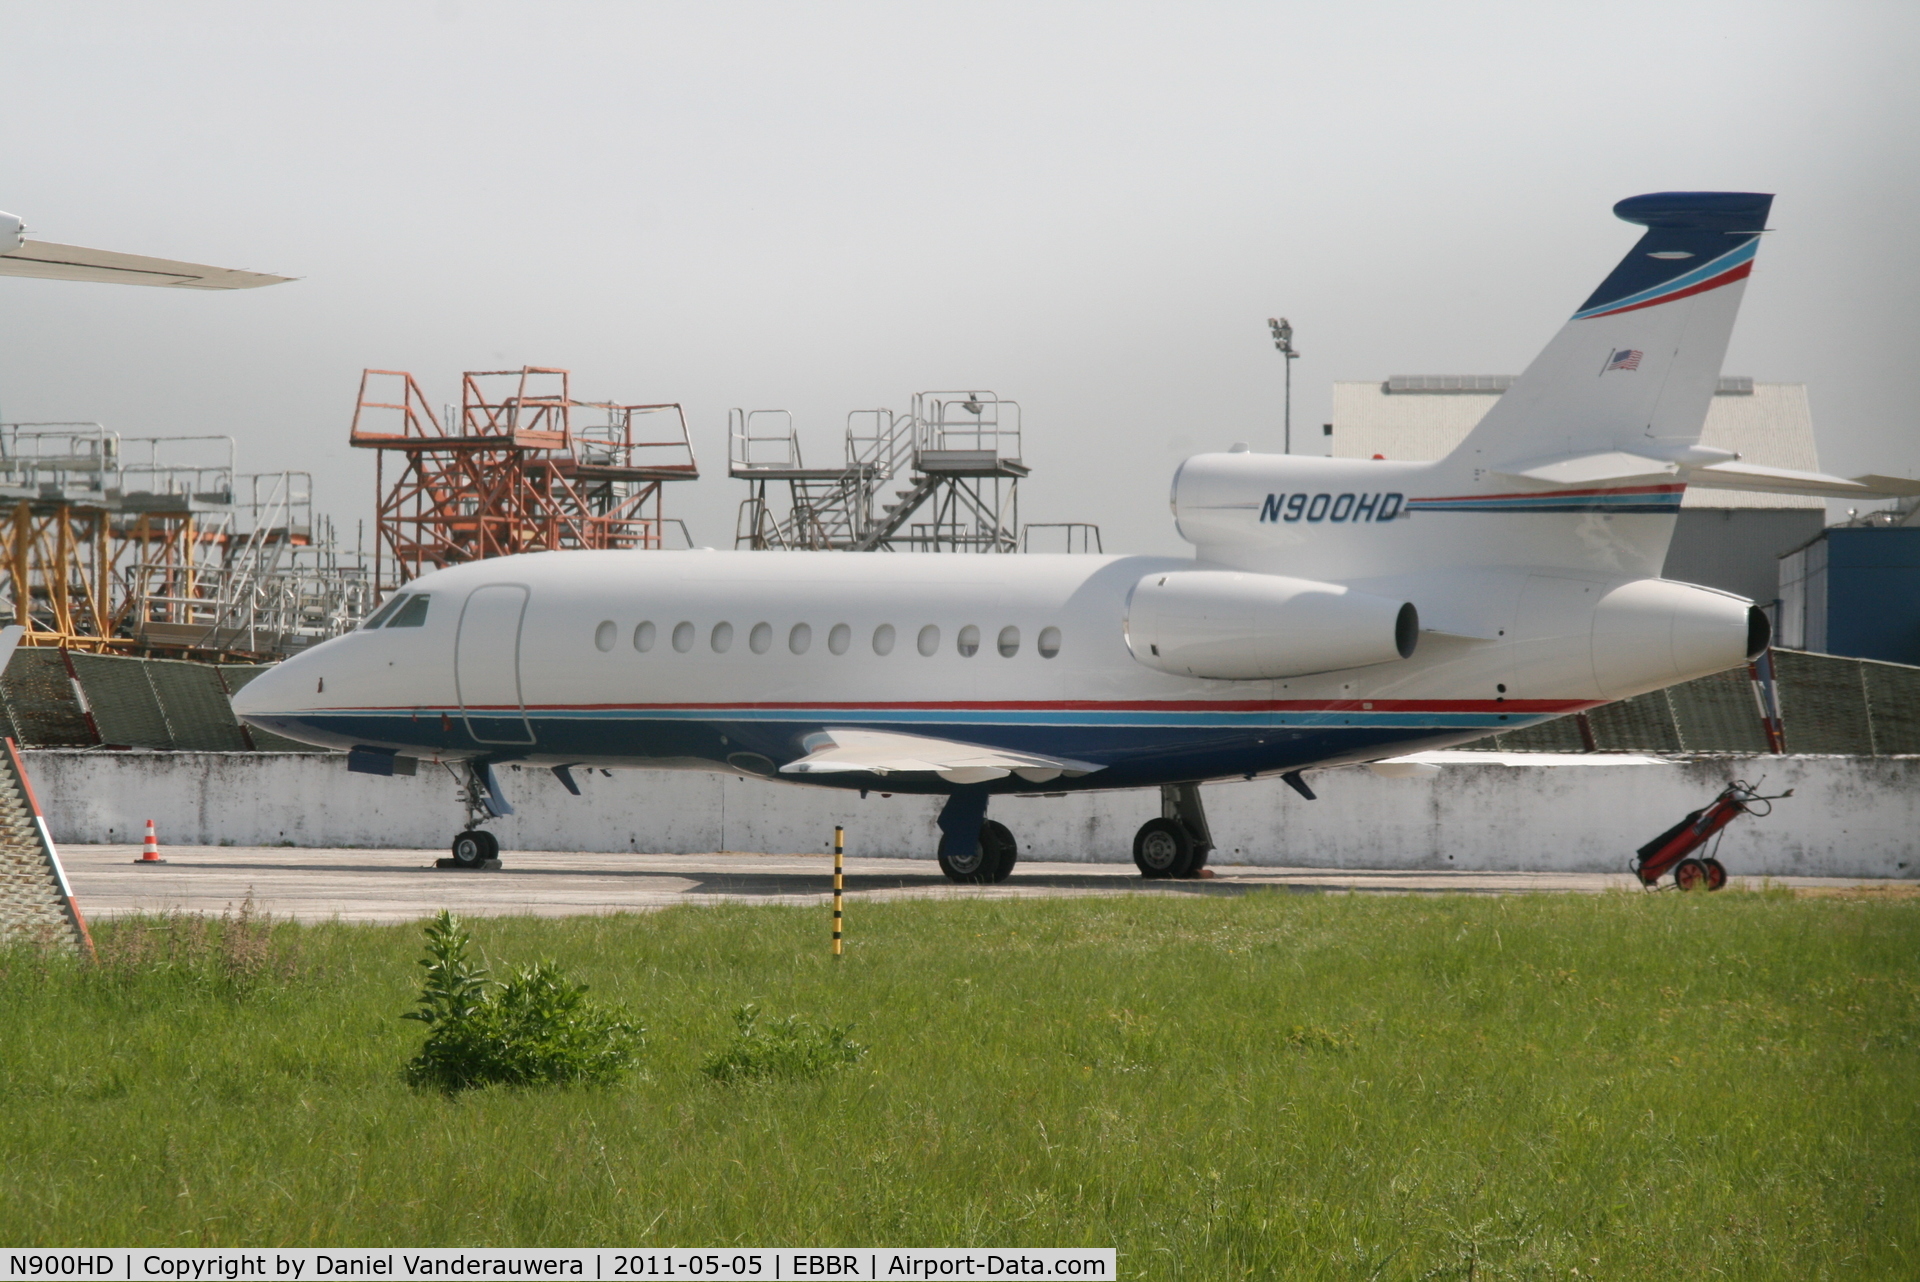 N900HD, 2002 Dassault Falcon 900EX C/N 103, Parked on G.A. apron